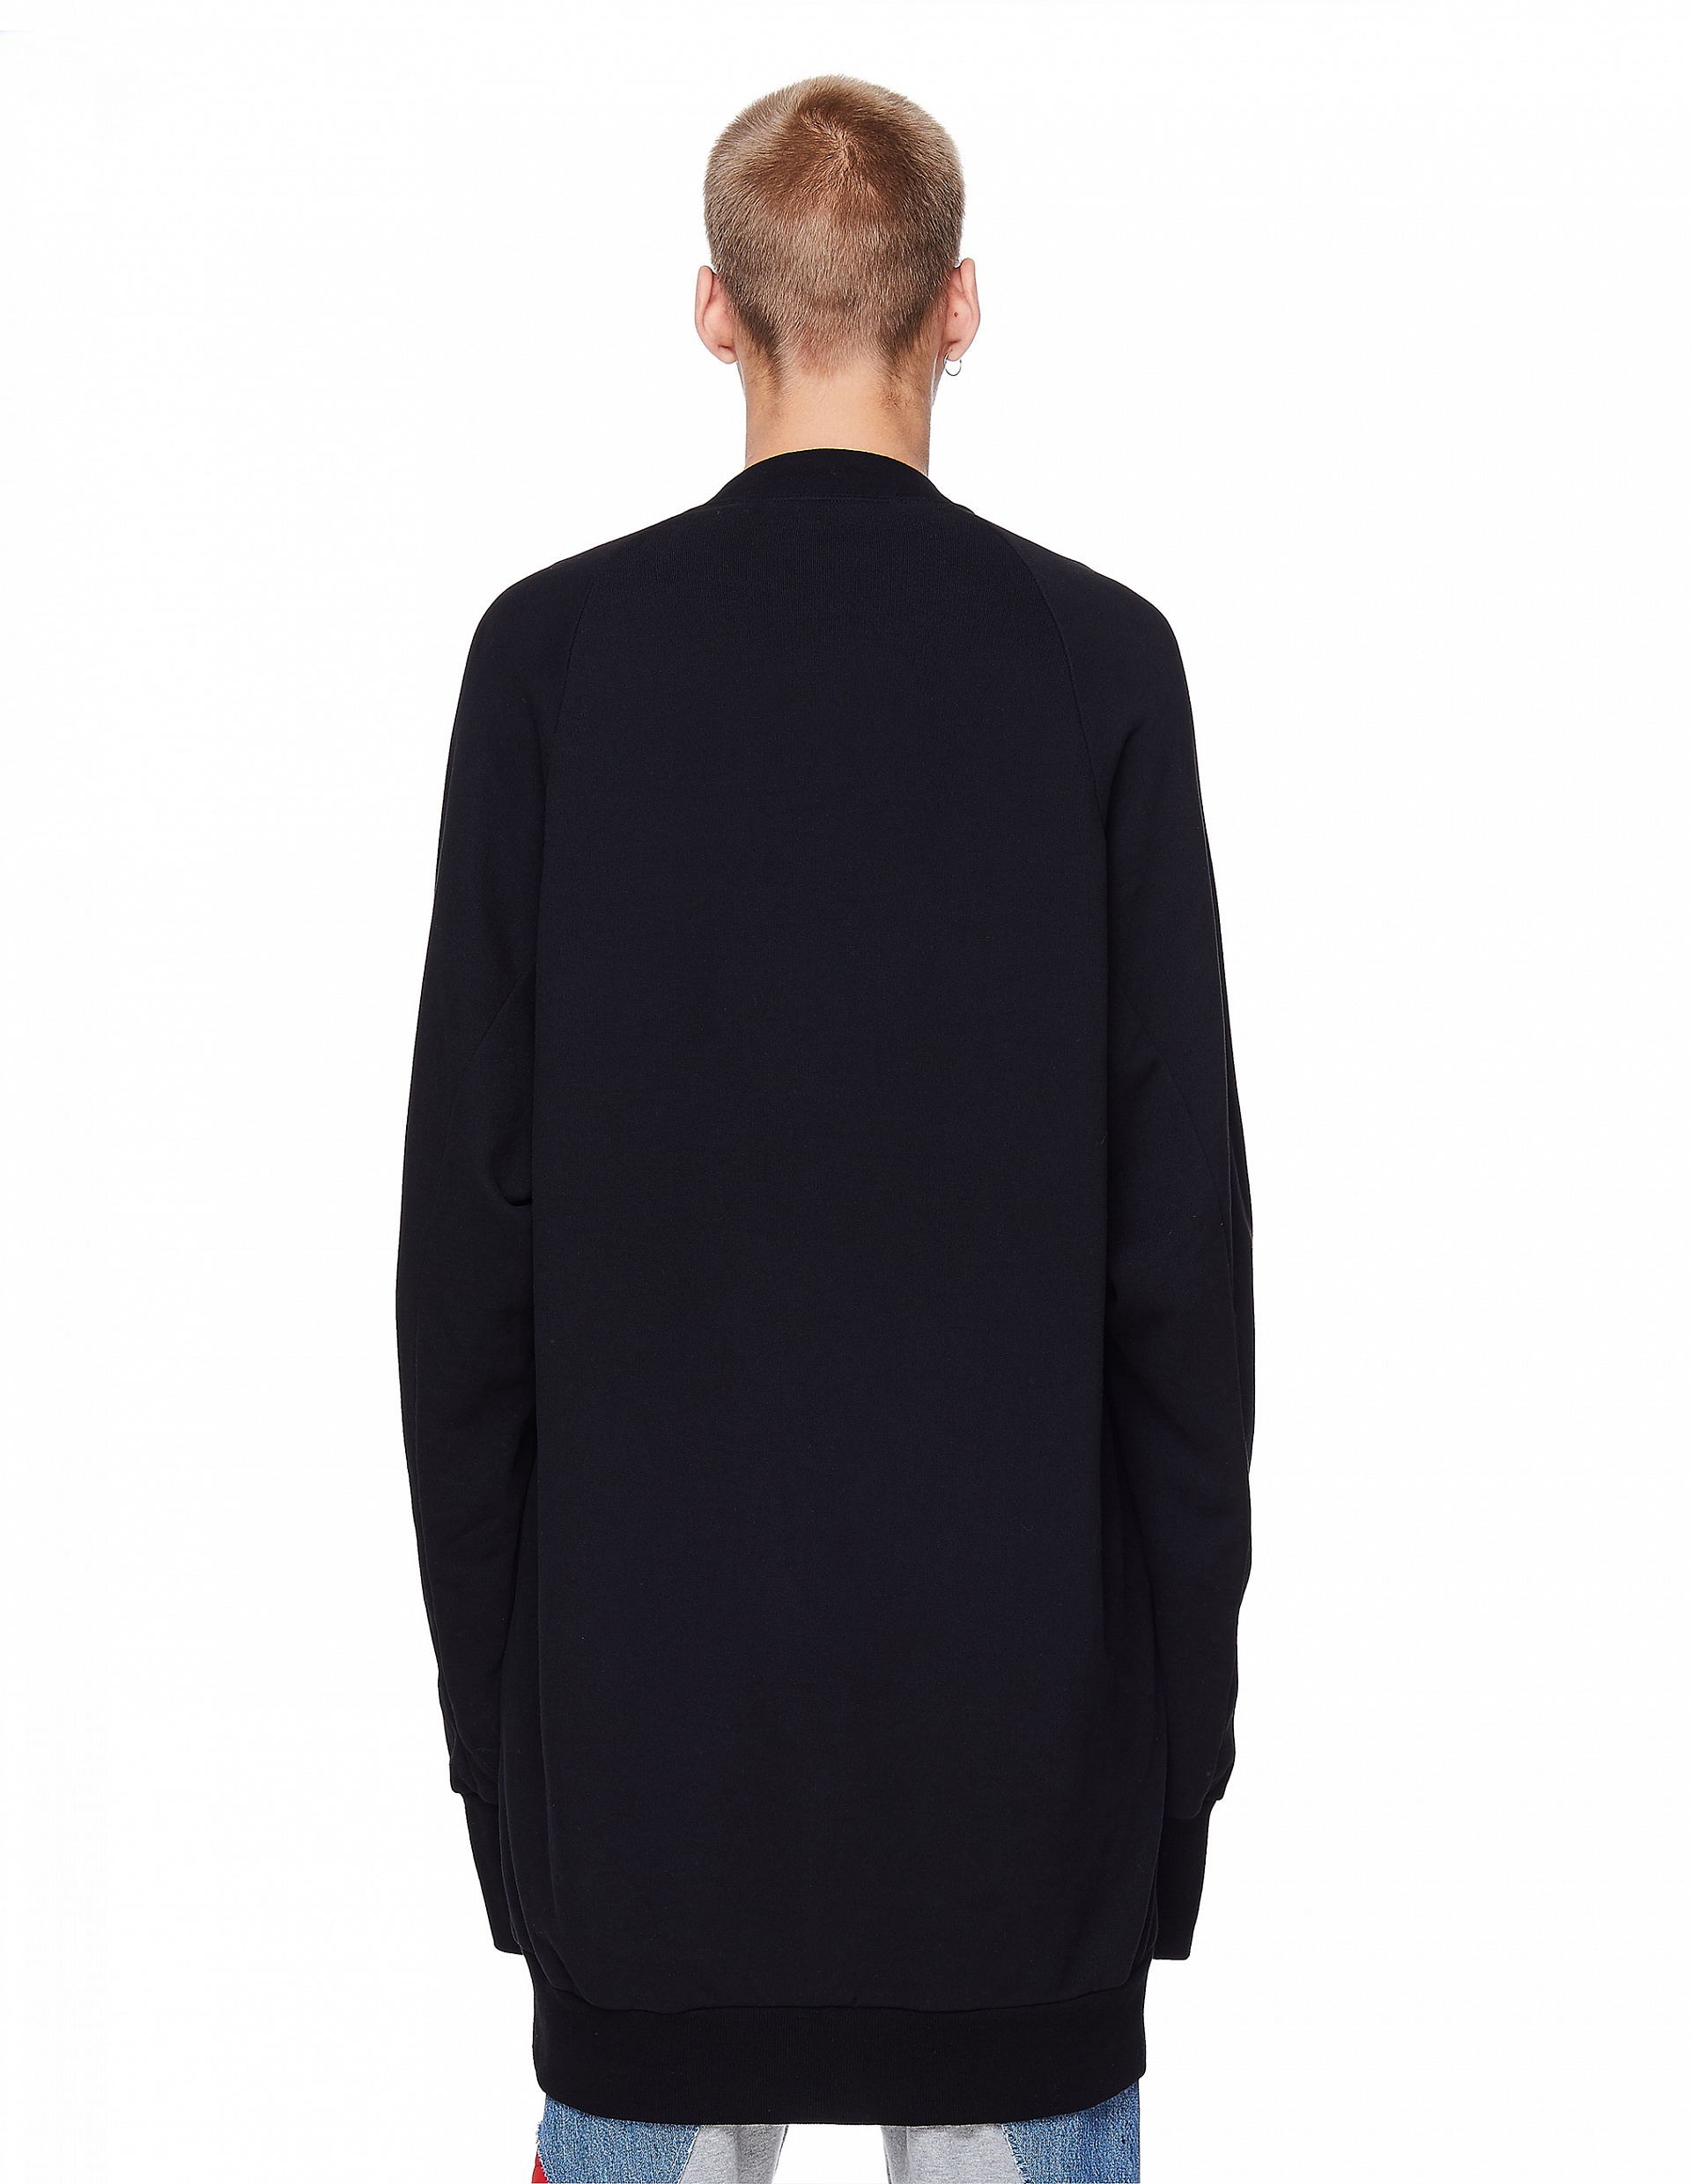 Buy Julius men black cotton long sweatshirt for $435 online on SVMOSCOW ...